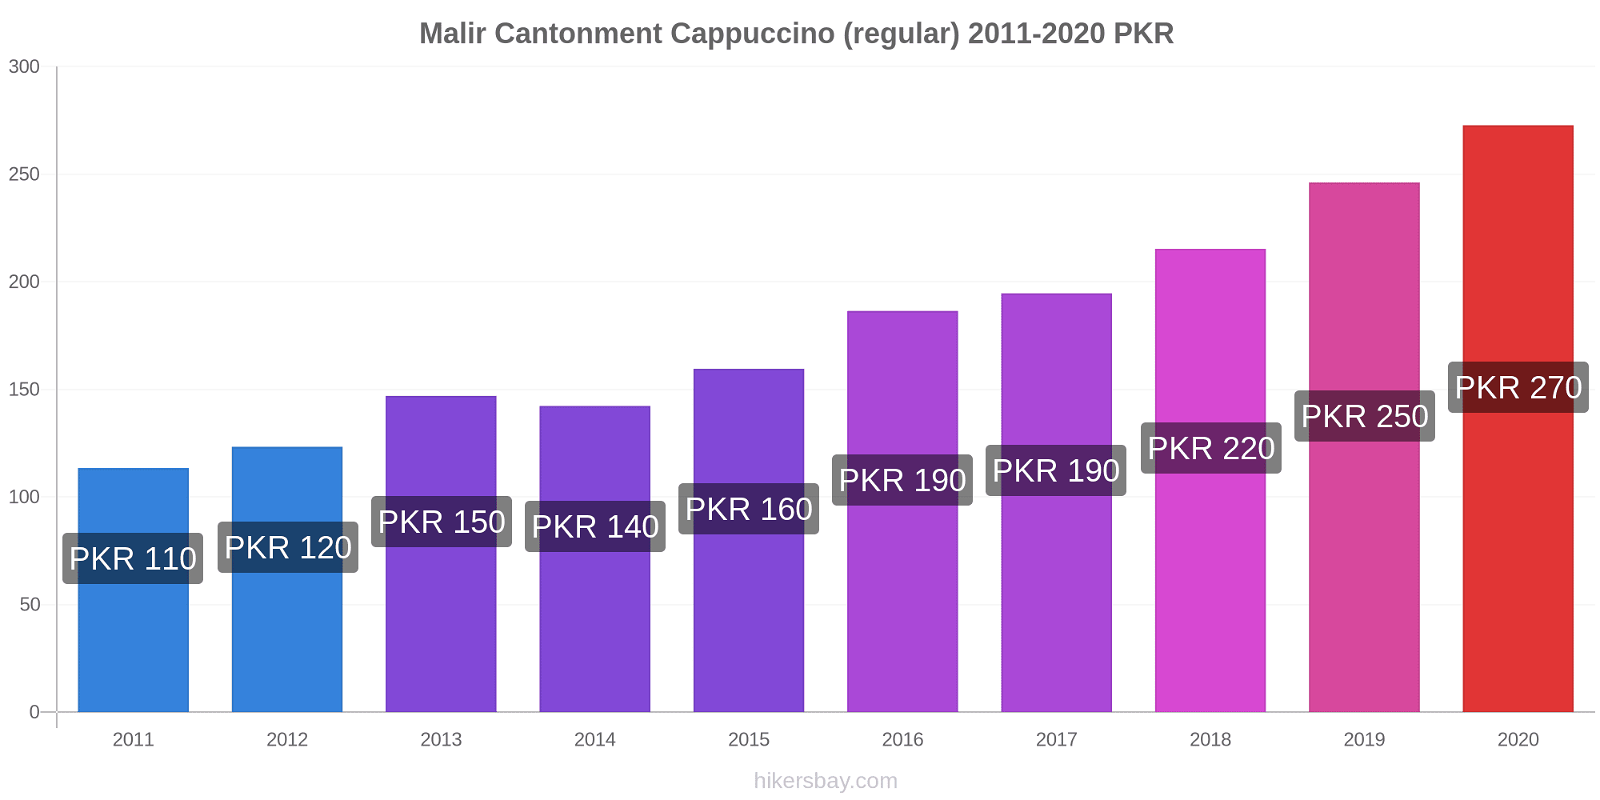 Malir Cantonment price changes Cappuccino (regular) hikersbay.com